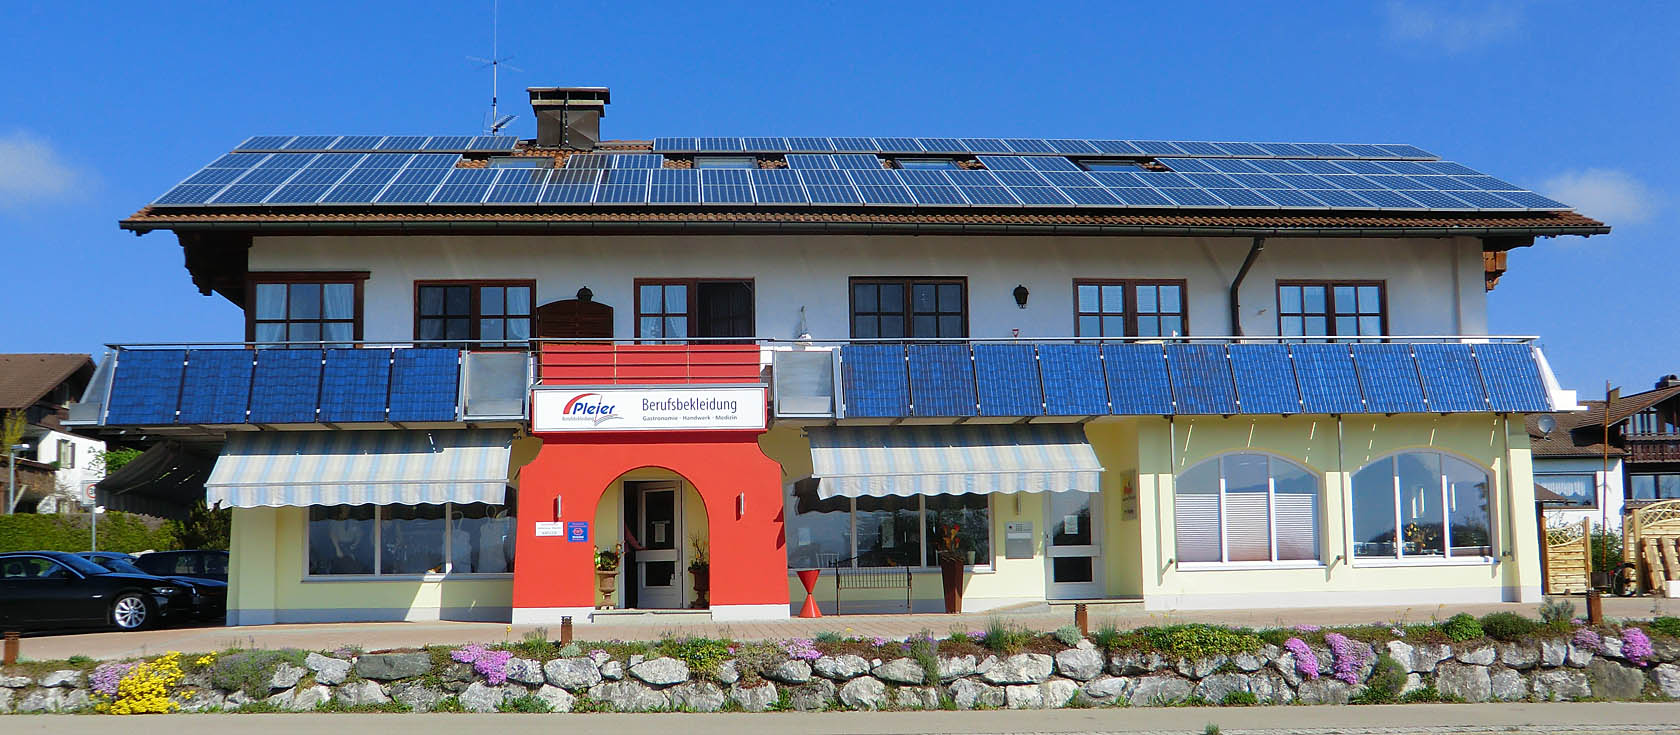 Photovoltaik - Balkongeländer